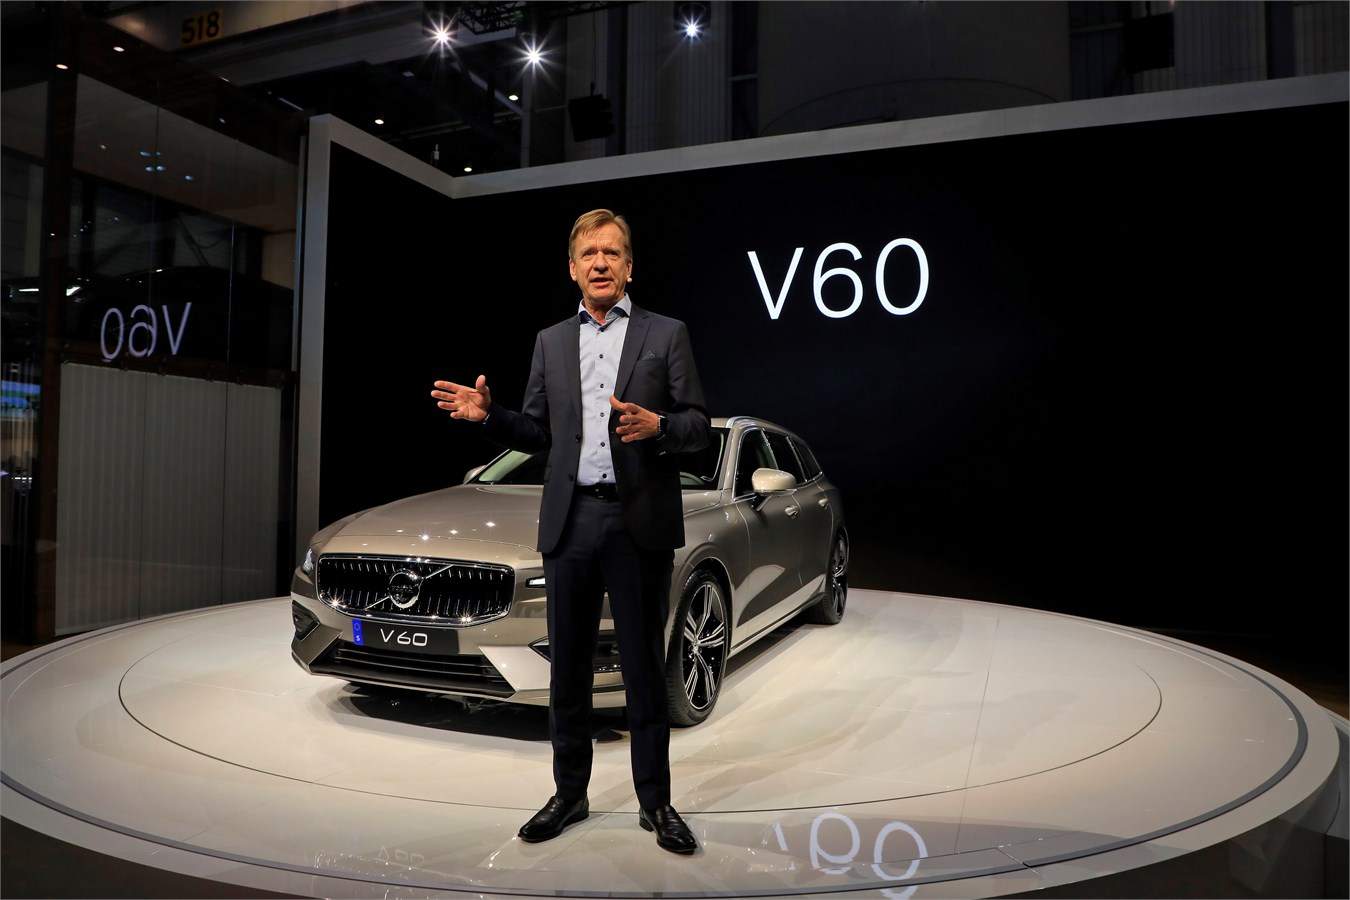 Volvo V60 & Hakan Samuelsson, Président & CEO Volvo Cars - Salon de Genève - Mars 2018 - photo@Ace Team pour Volvo Car France